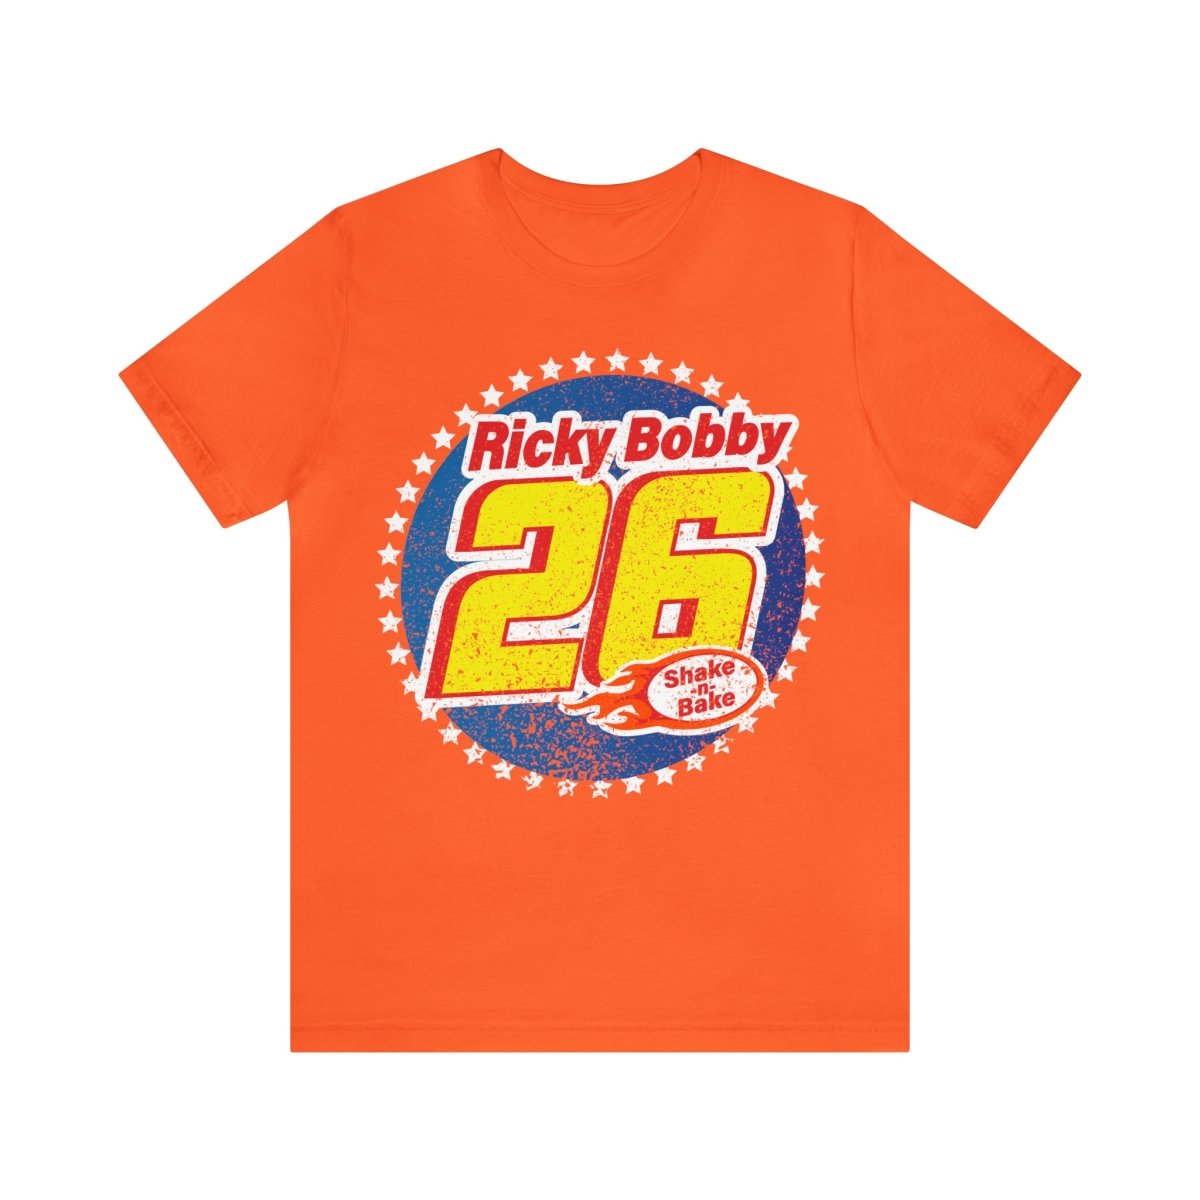 Ricky Bobby #26 Premium T-Shirt, Champion Race Car Driver, Go Fast